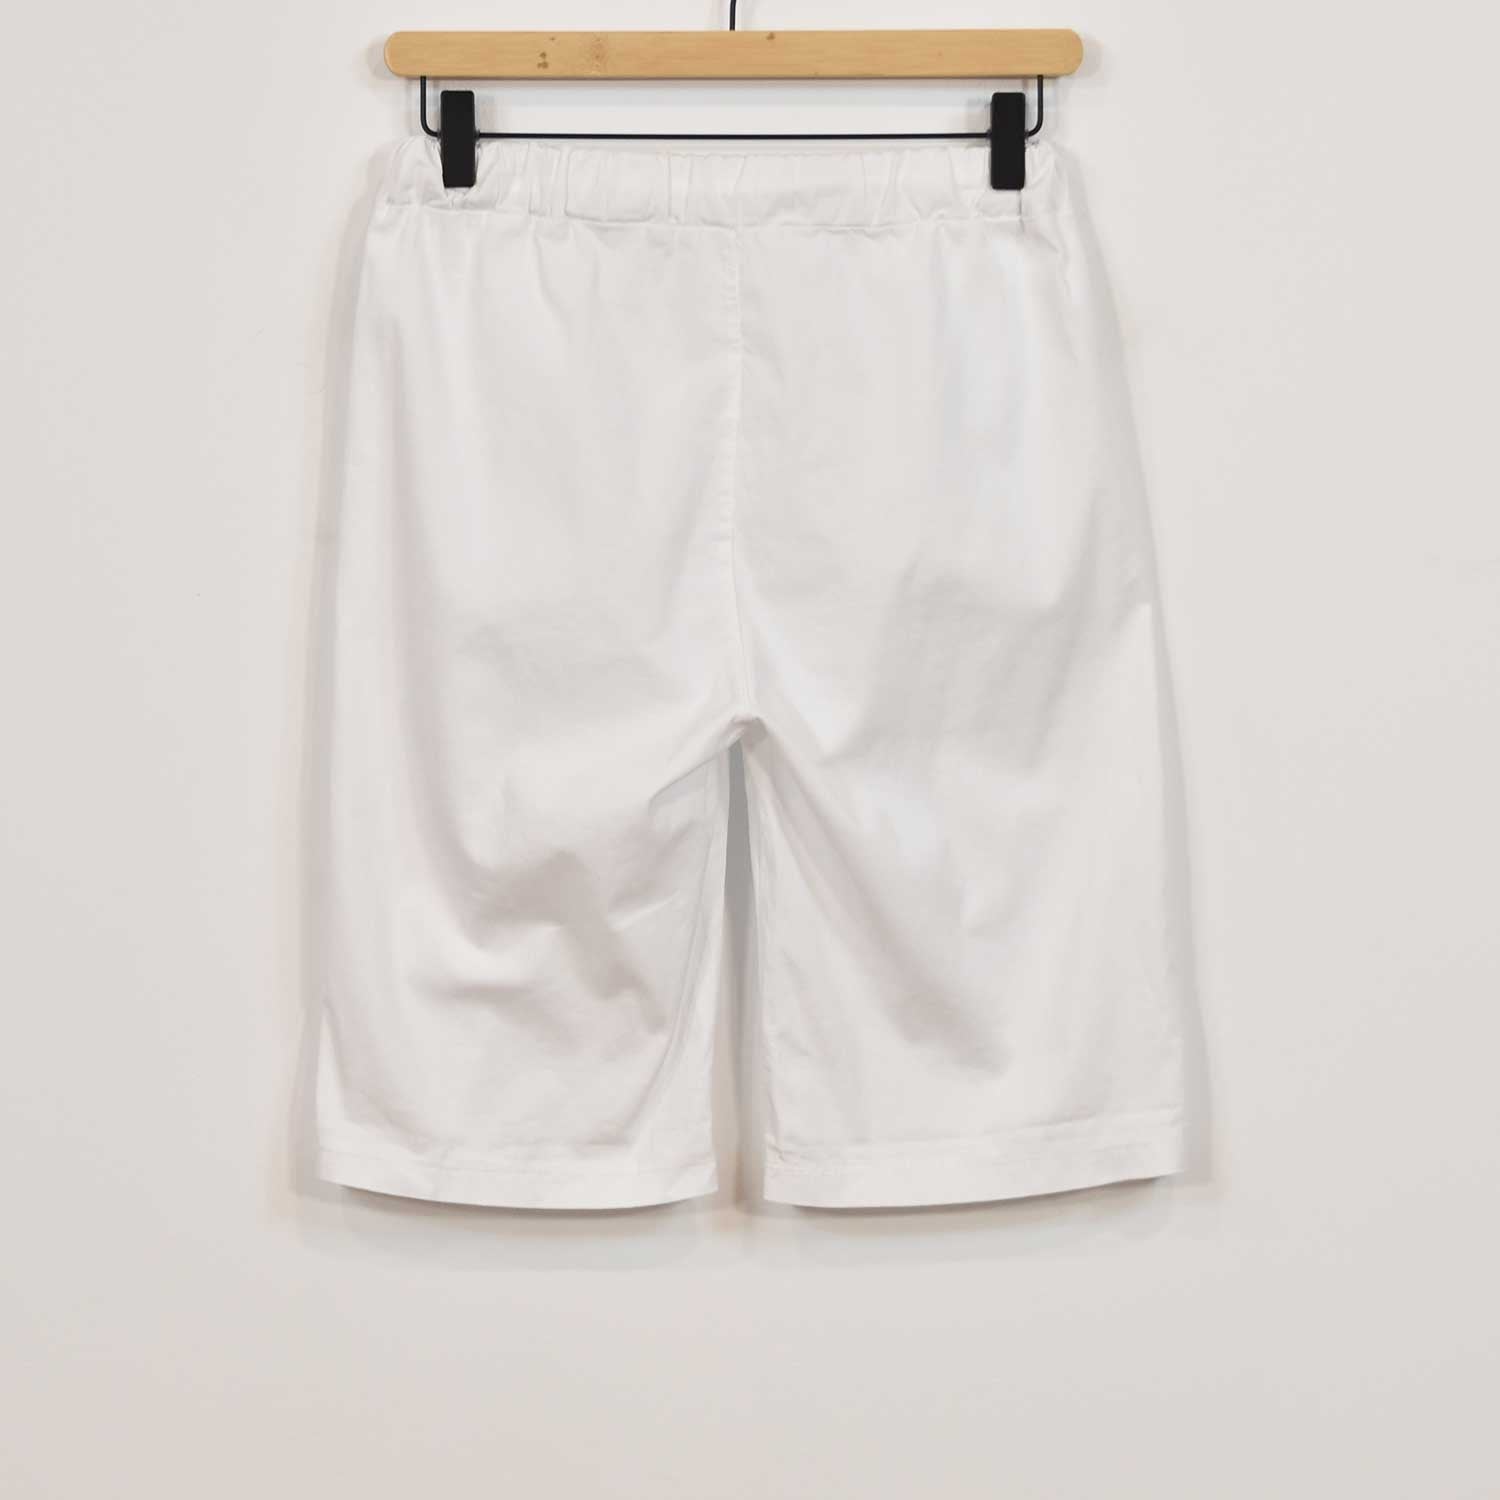 White ribbon shorts
